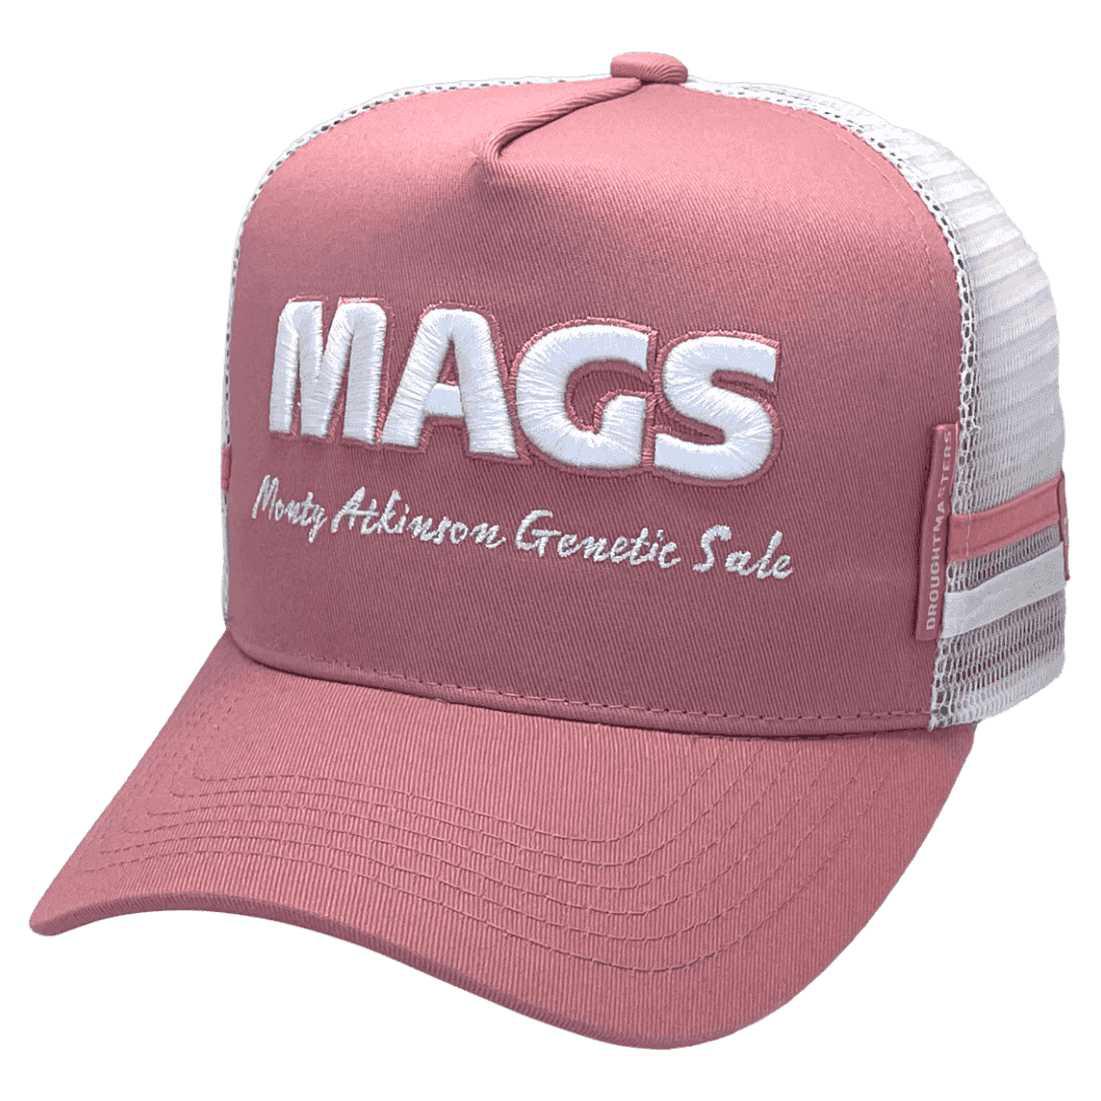 MAGS Monty Atkinson Genetic Sale Ipswich Qld HP Original Midrange Aussie Trucker Hat with Australian Head Fit Crown and 2 Sidebands